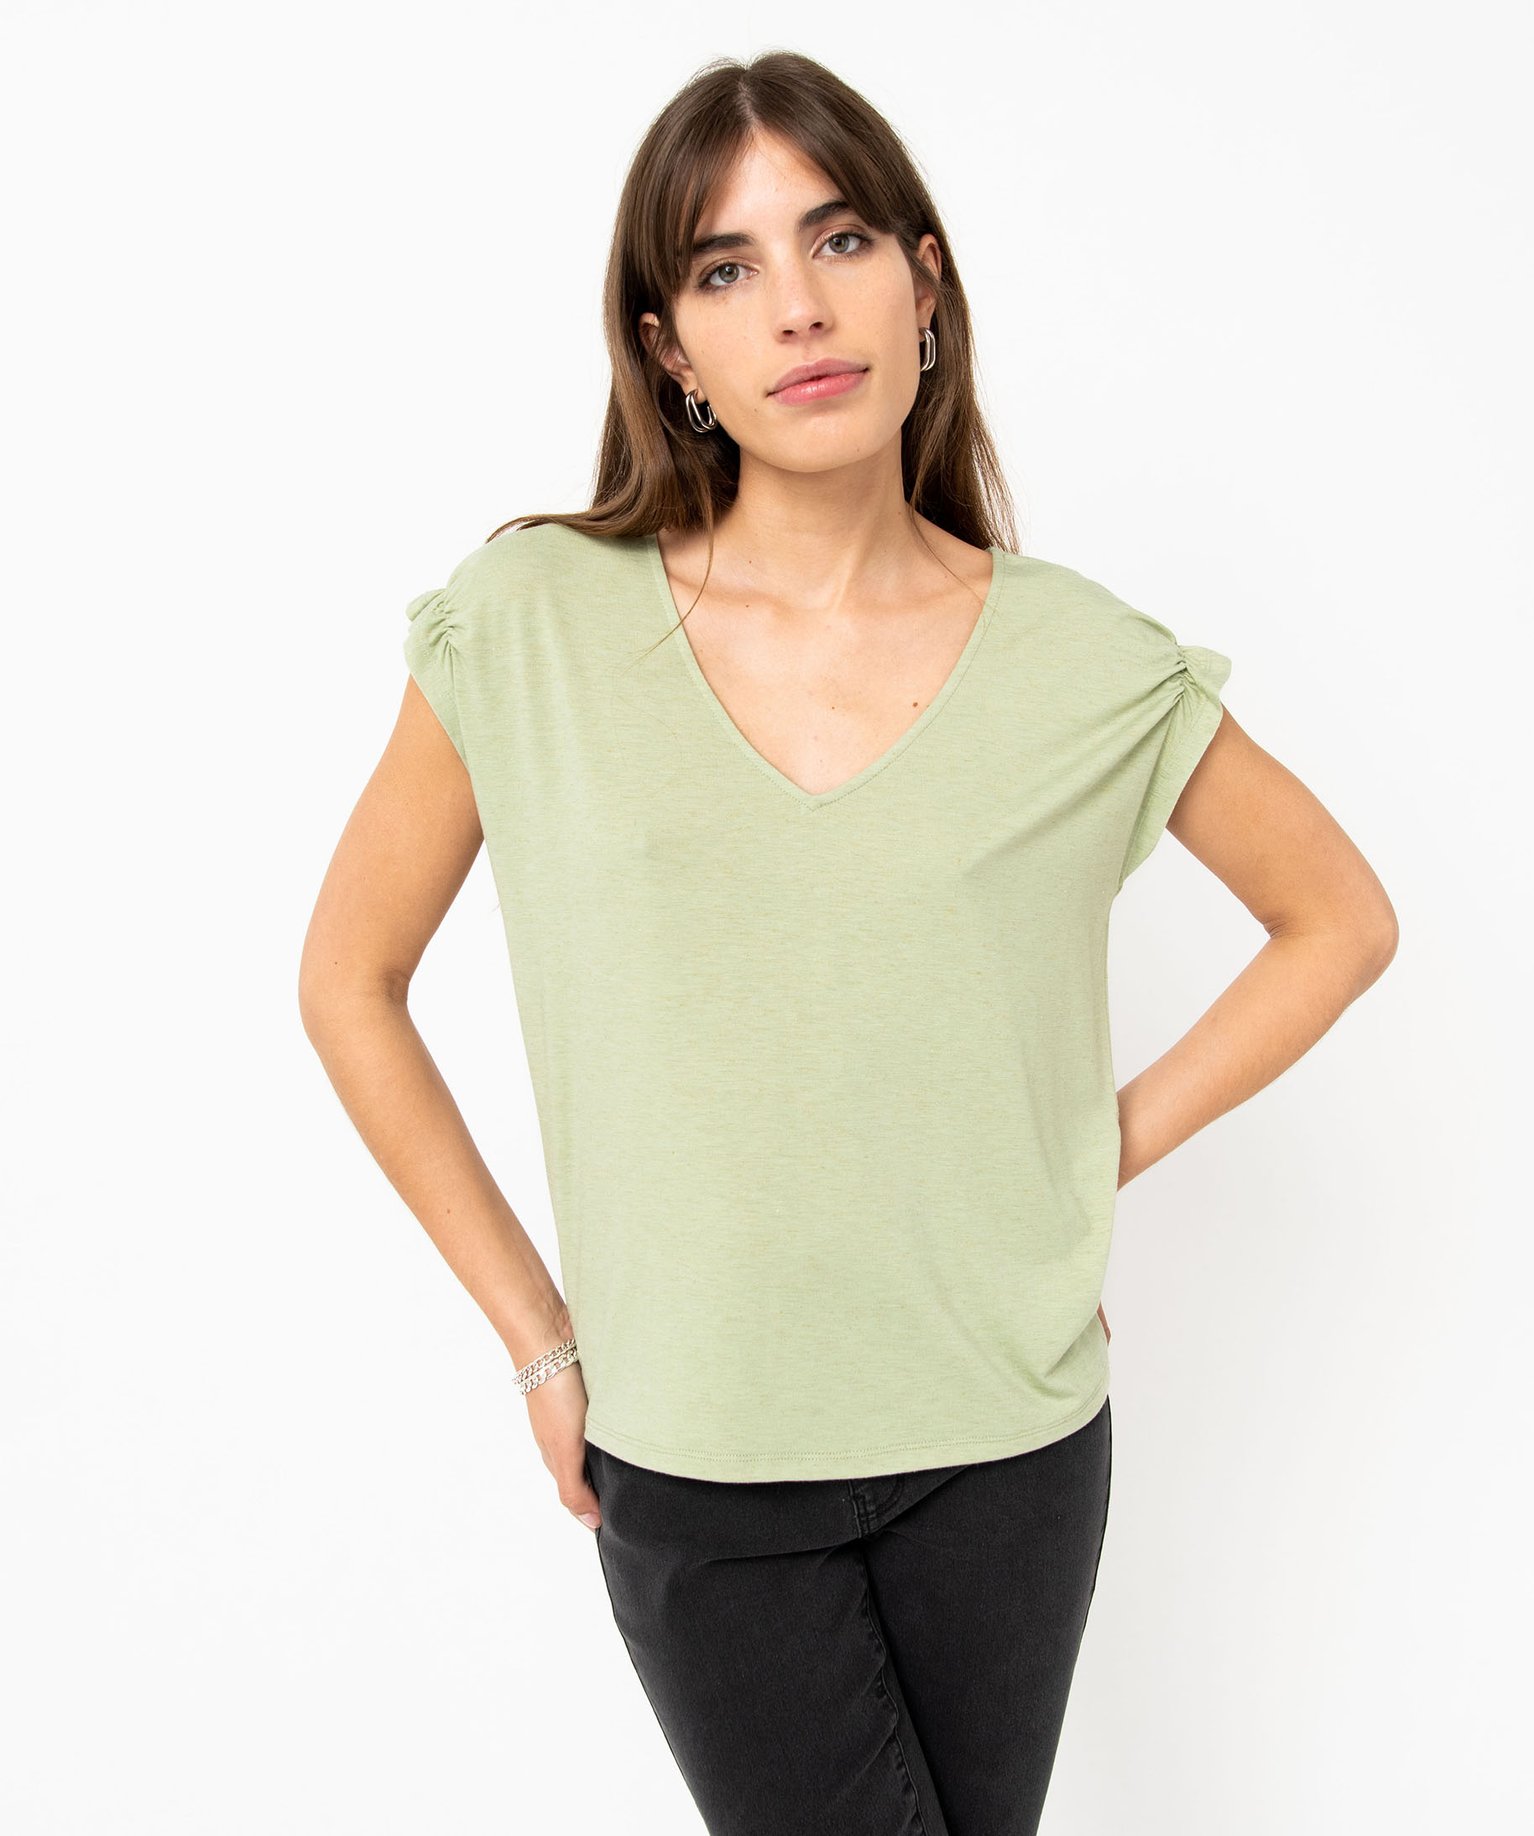 tee-shirt femme a manches courtes froncees et col v vert t-shirts manches courtes